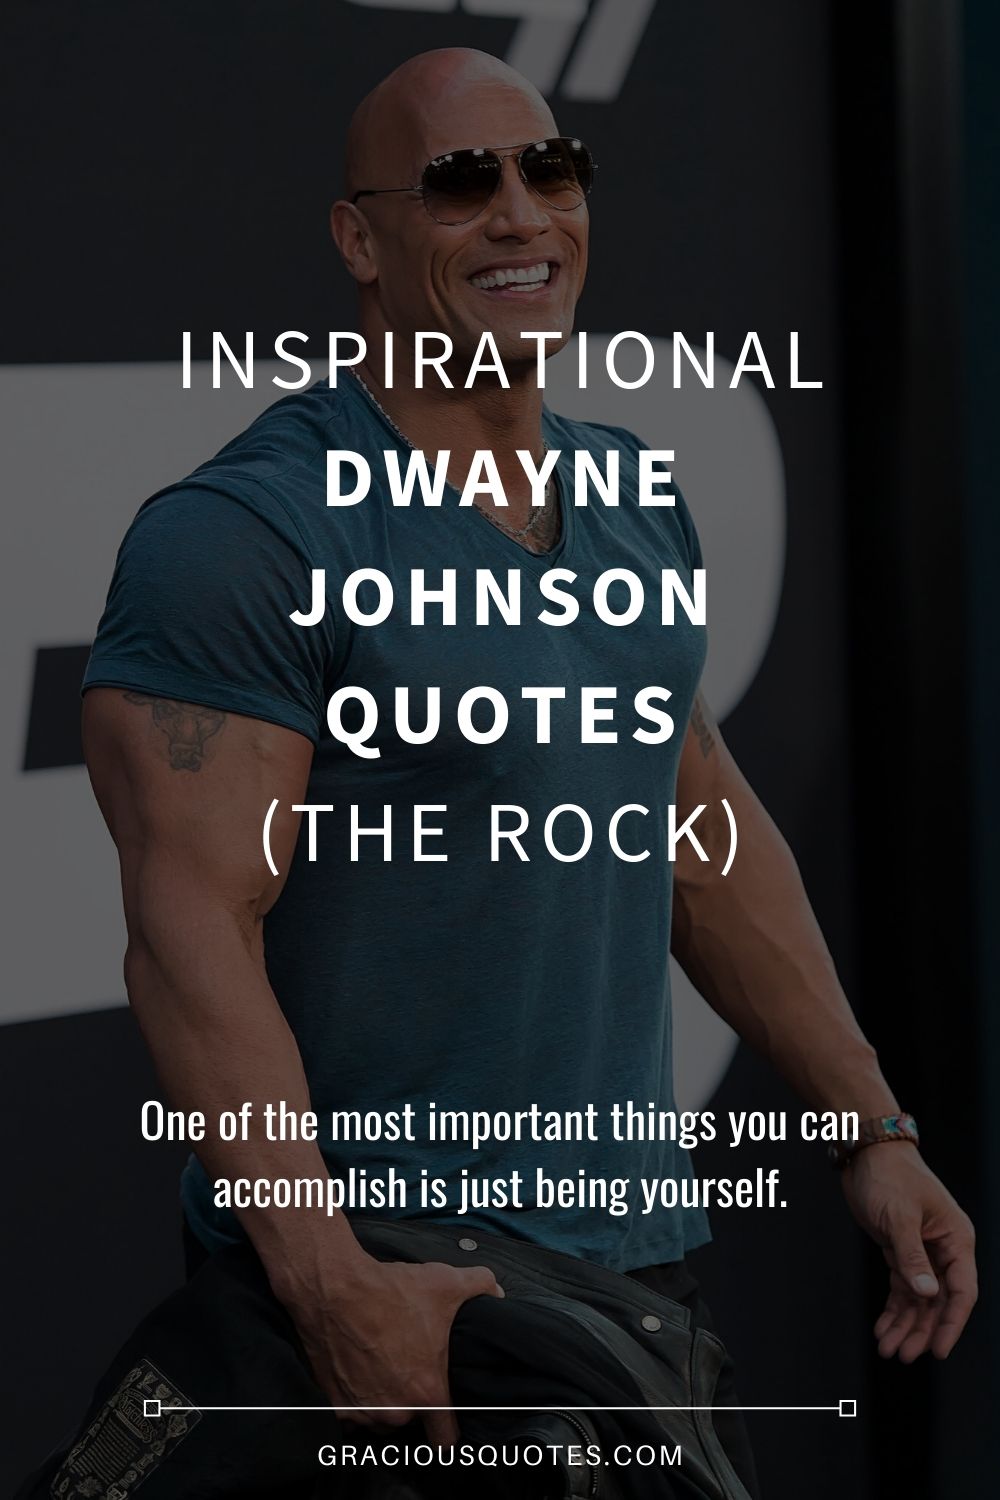 Inspirational Dwayne Johnson Quotes (THE ROCK) - Gracious Quotes